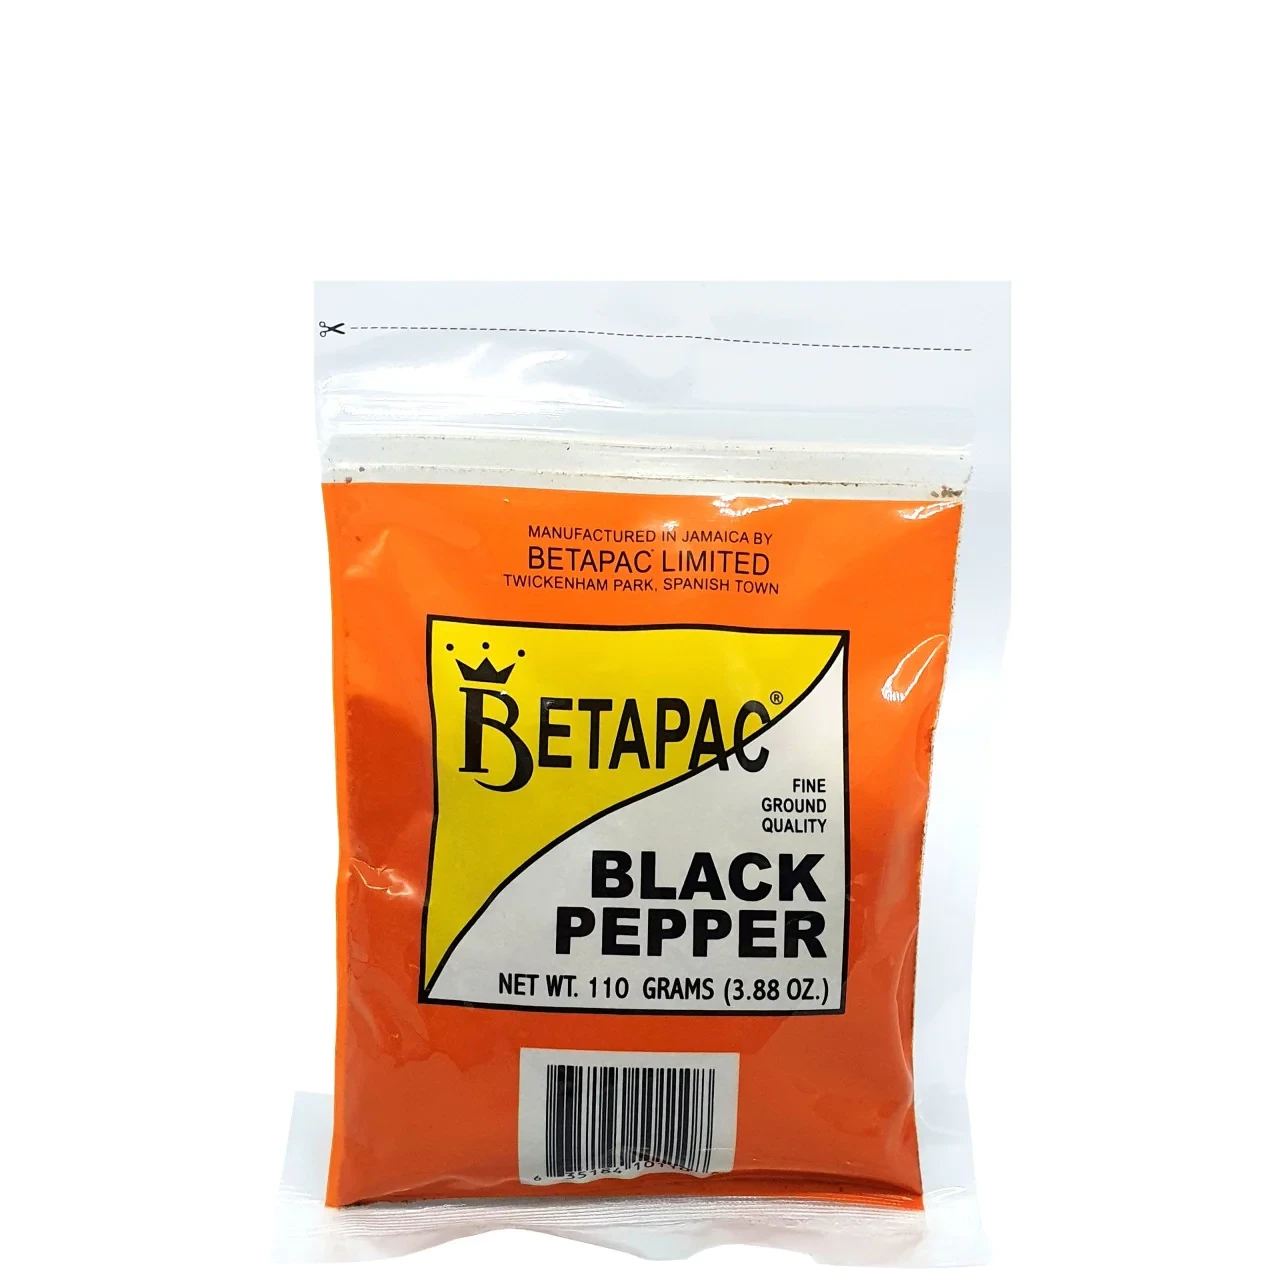 BETAPAC BLACK PEPPER SMALL PACK